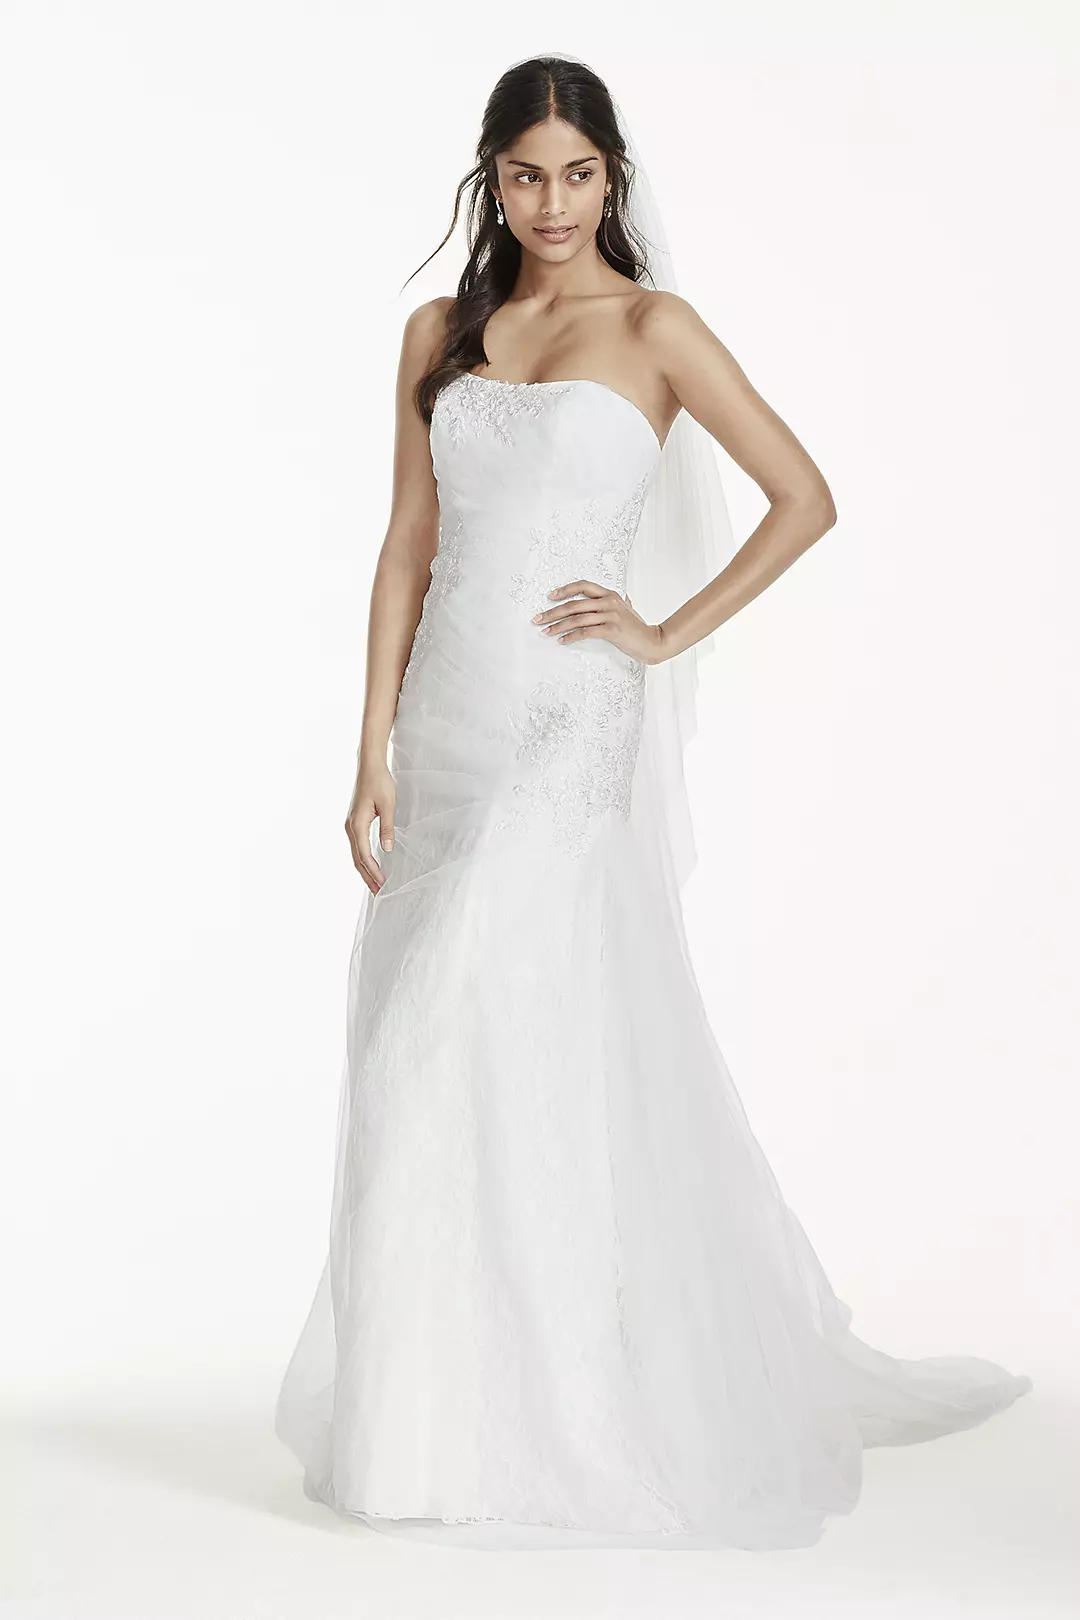 Tulle Over Lace Mermaid Wedding Dress Image